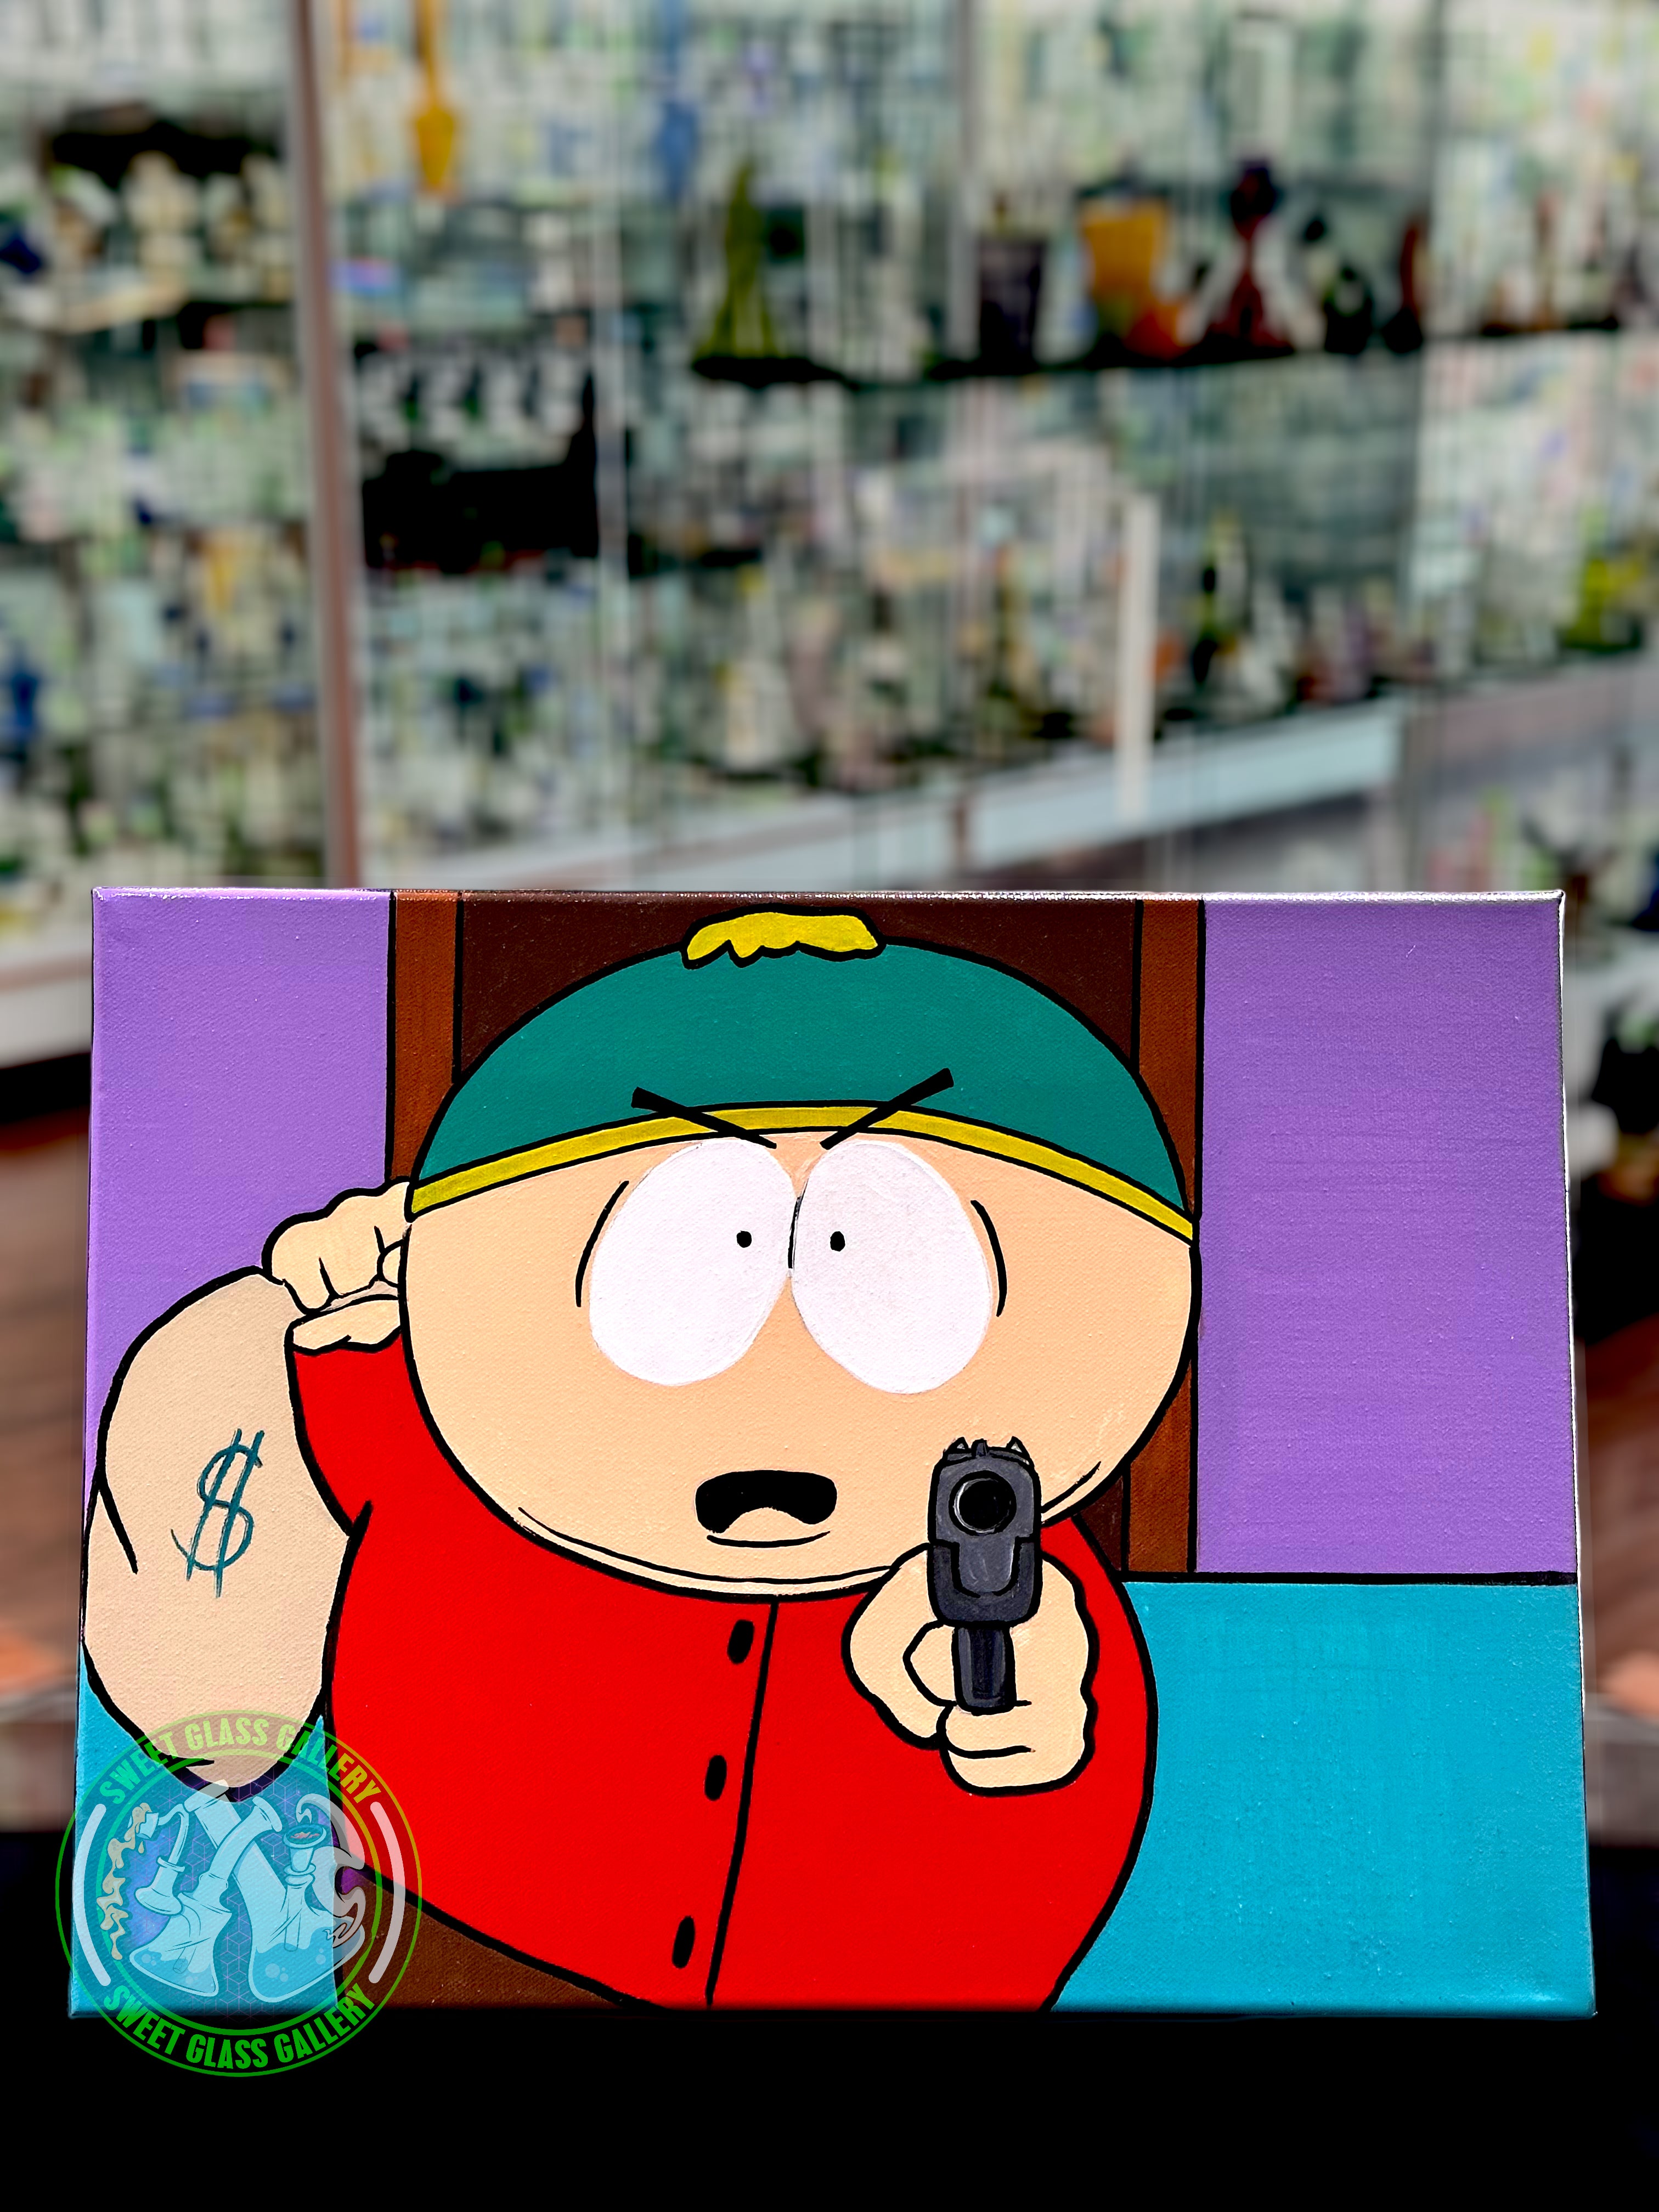 Avila Sicc - Painting (Cartman - South Park)